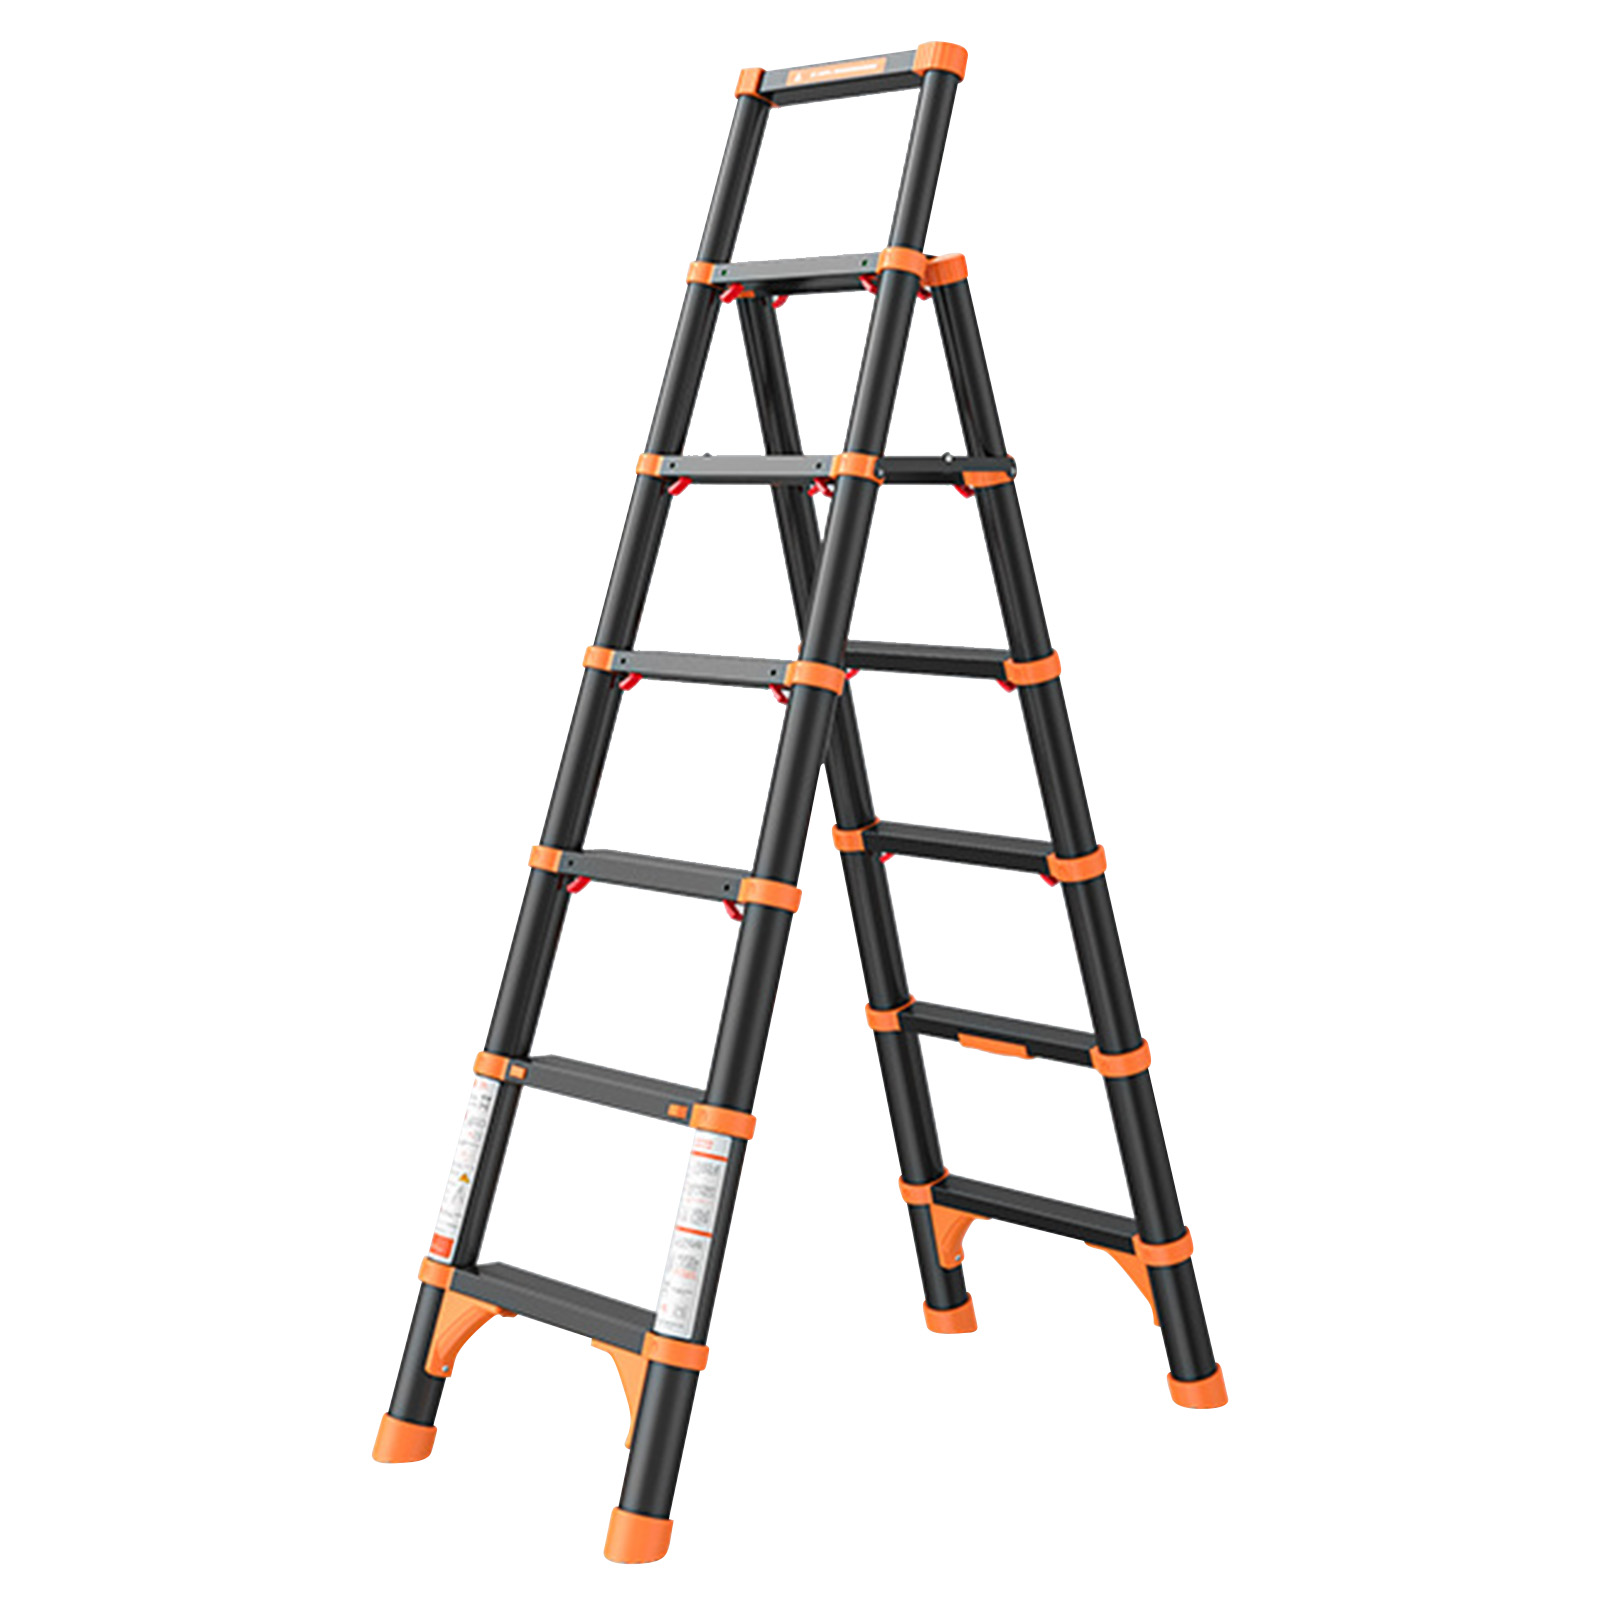 Black and orange six-step ladder